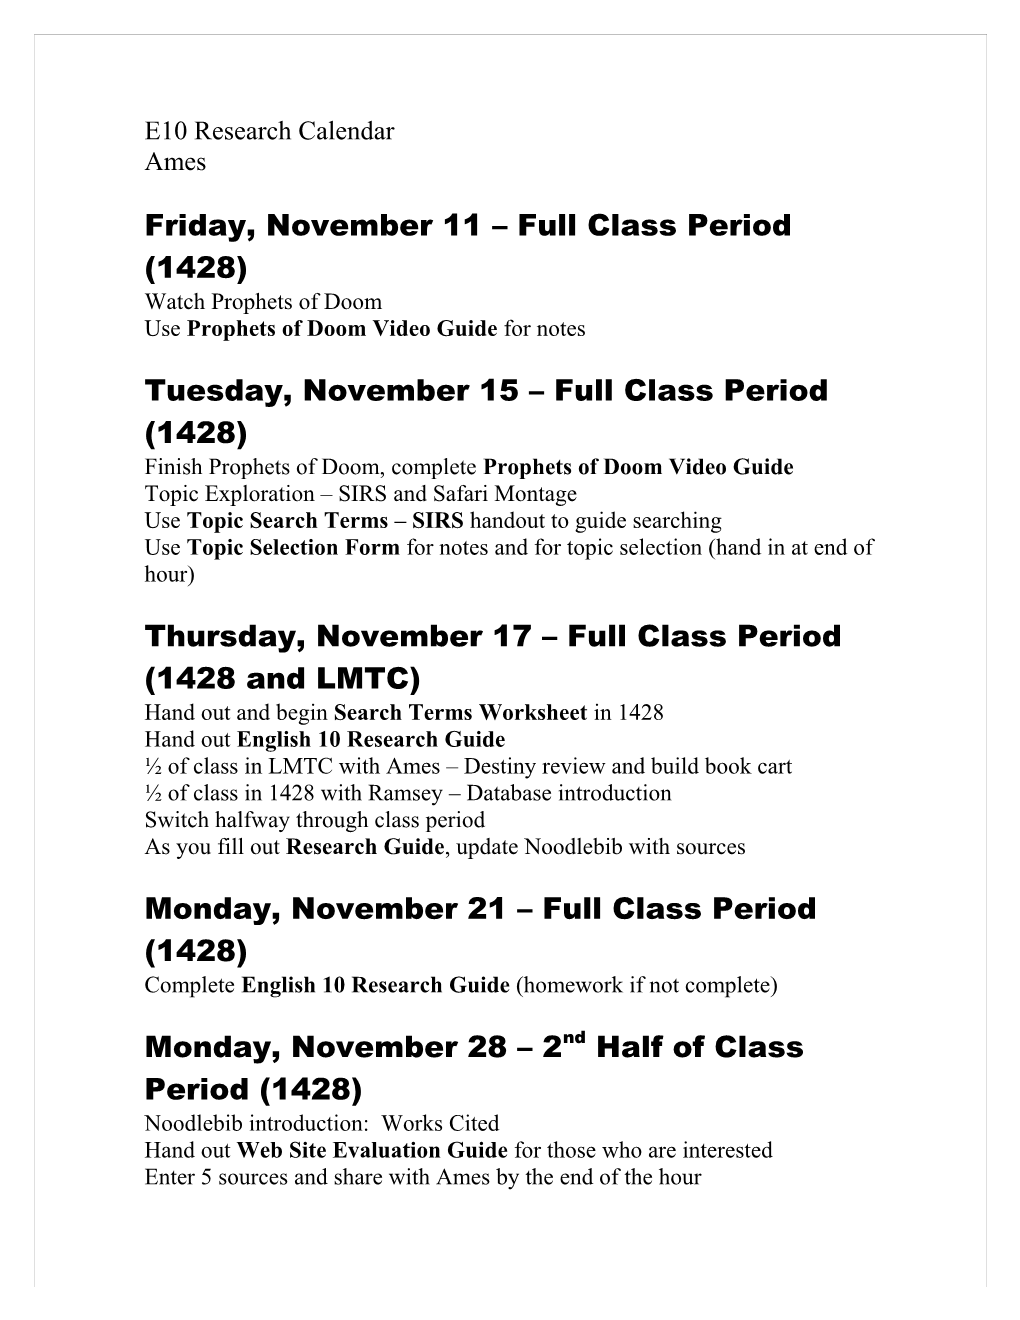 Friday, November 11 Full Class Period (1428)